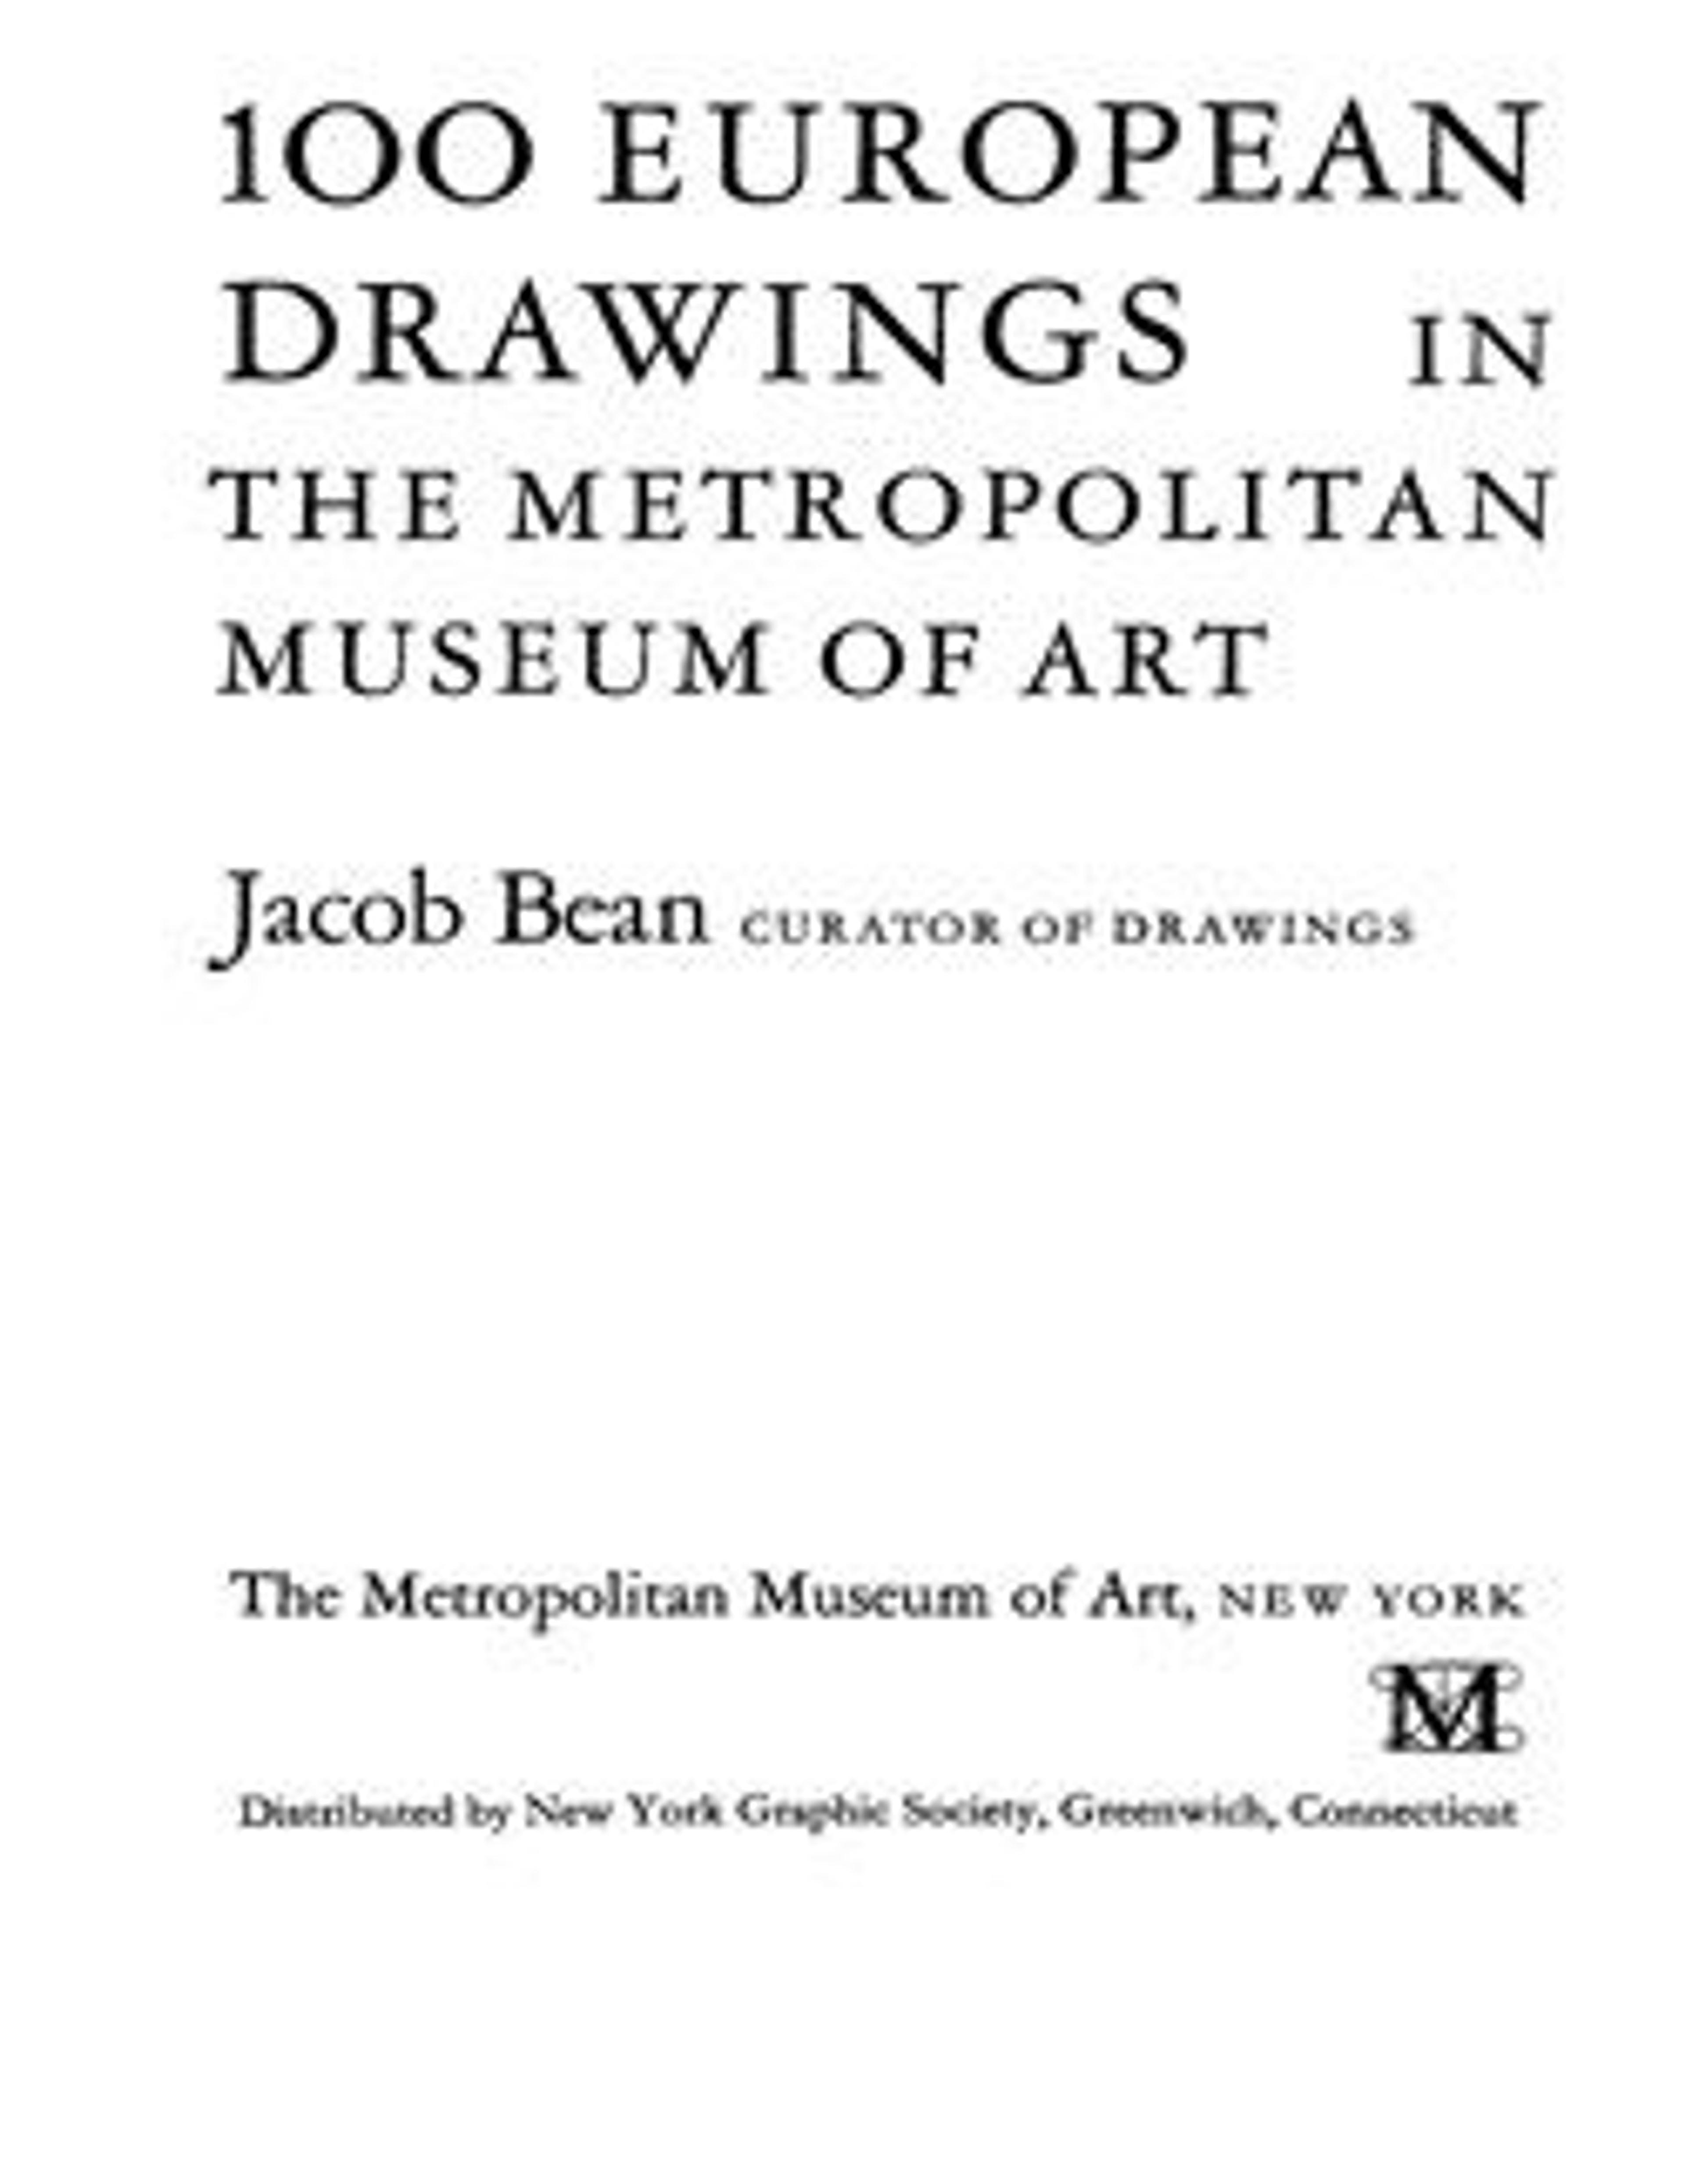 100 European Drawings in The Metropolitan Museum of Art